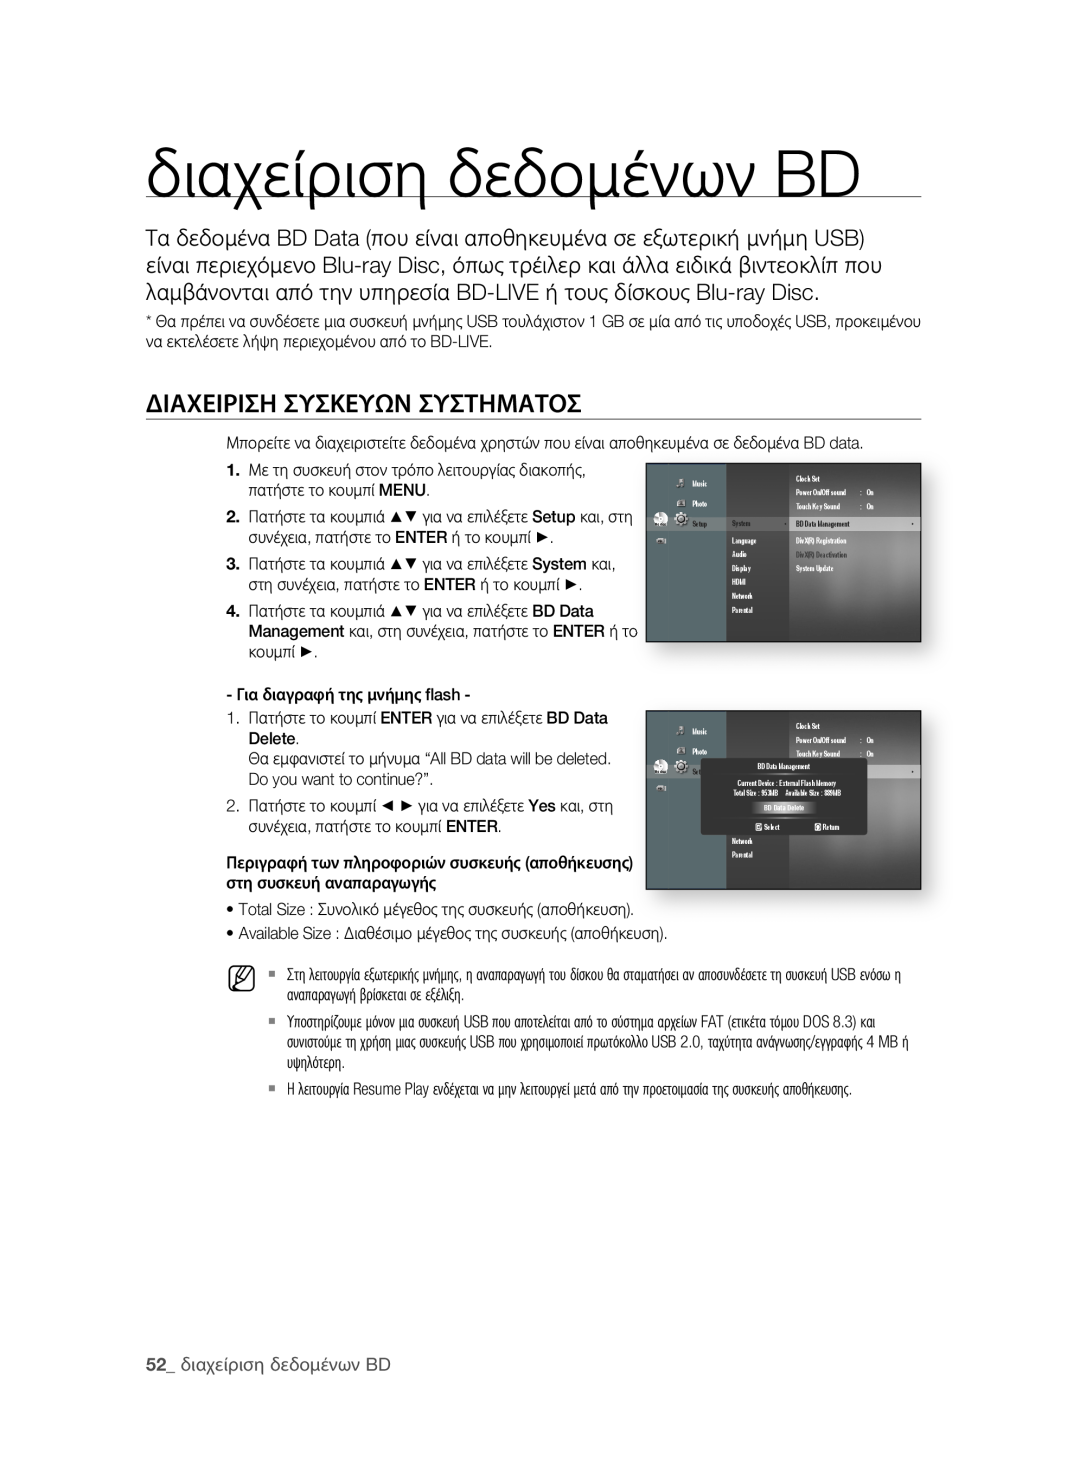 Samsung BD-P1580/EDC manual διΑΧειριση σΥσΚεΥΩΝ σΥσΤηΜΑΤοσ, 2 διαχείριση δεδομένων BD 